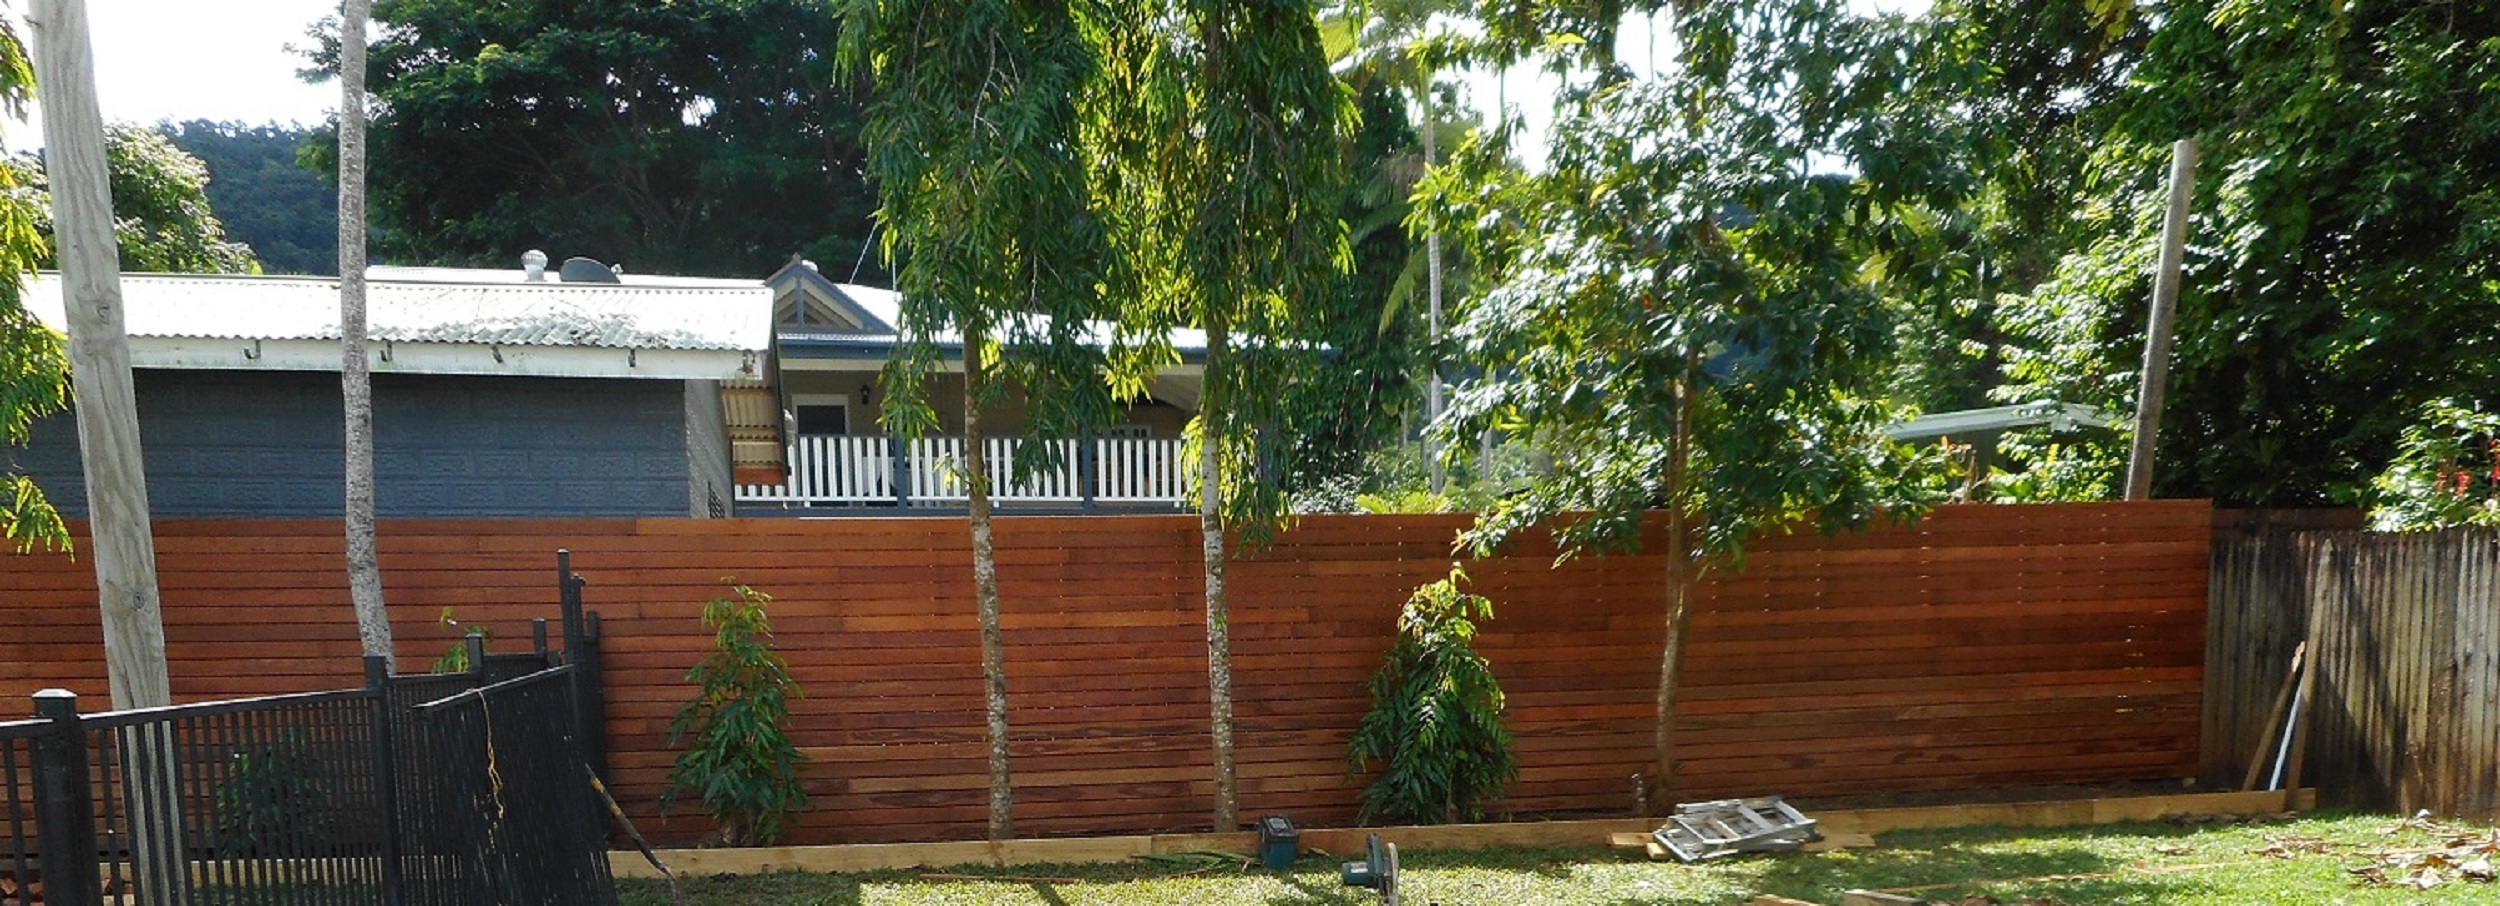 Timber Fence.jpg